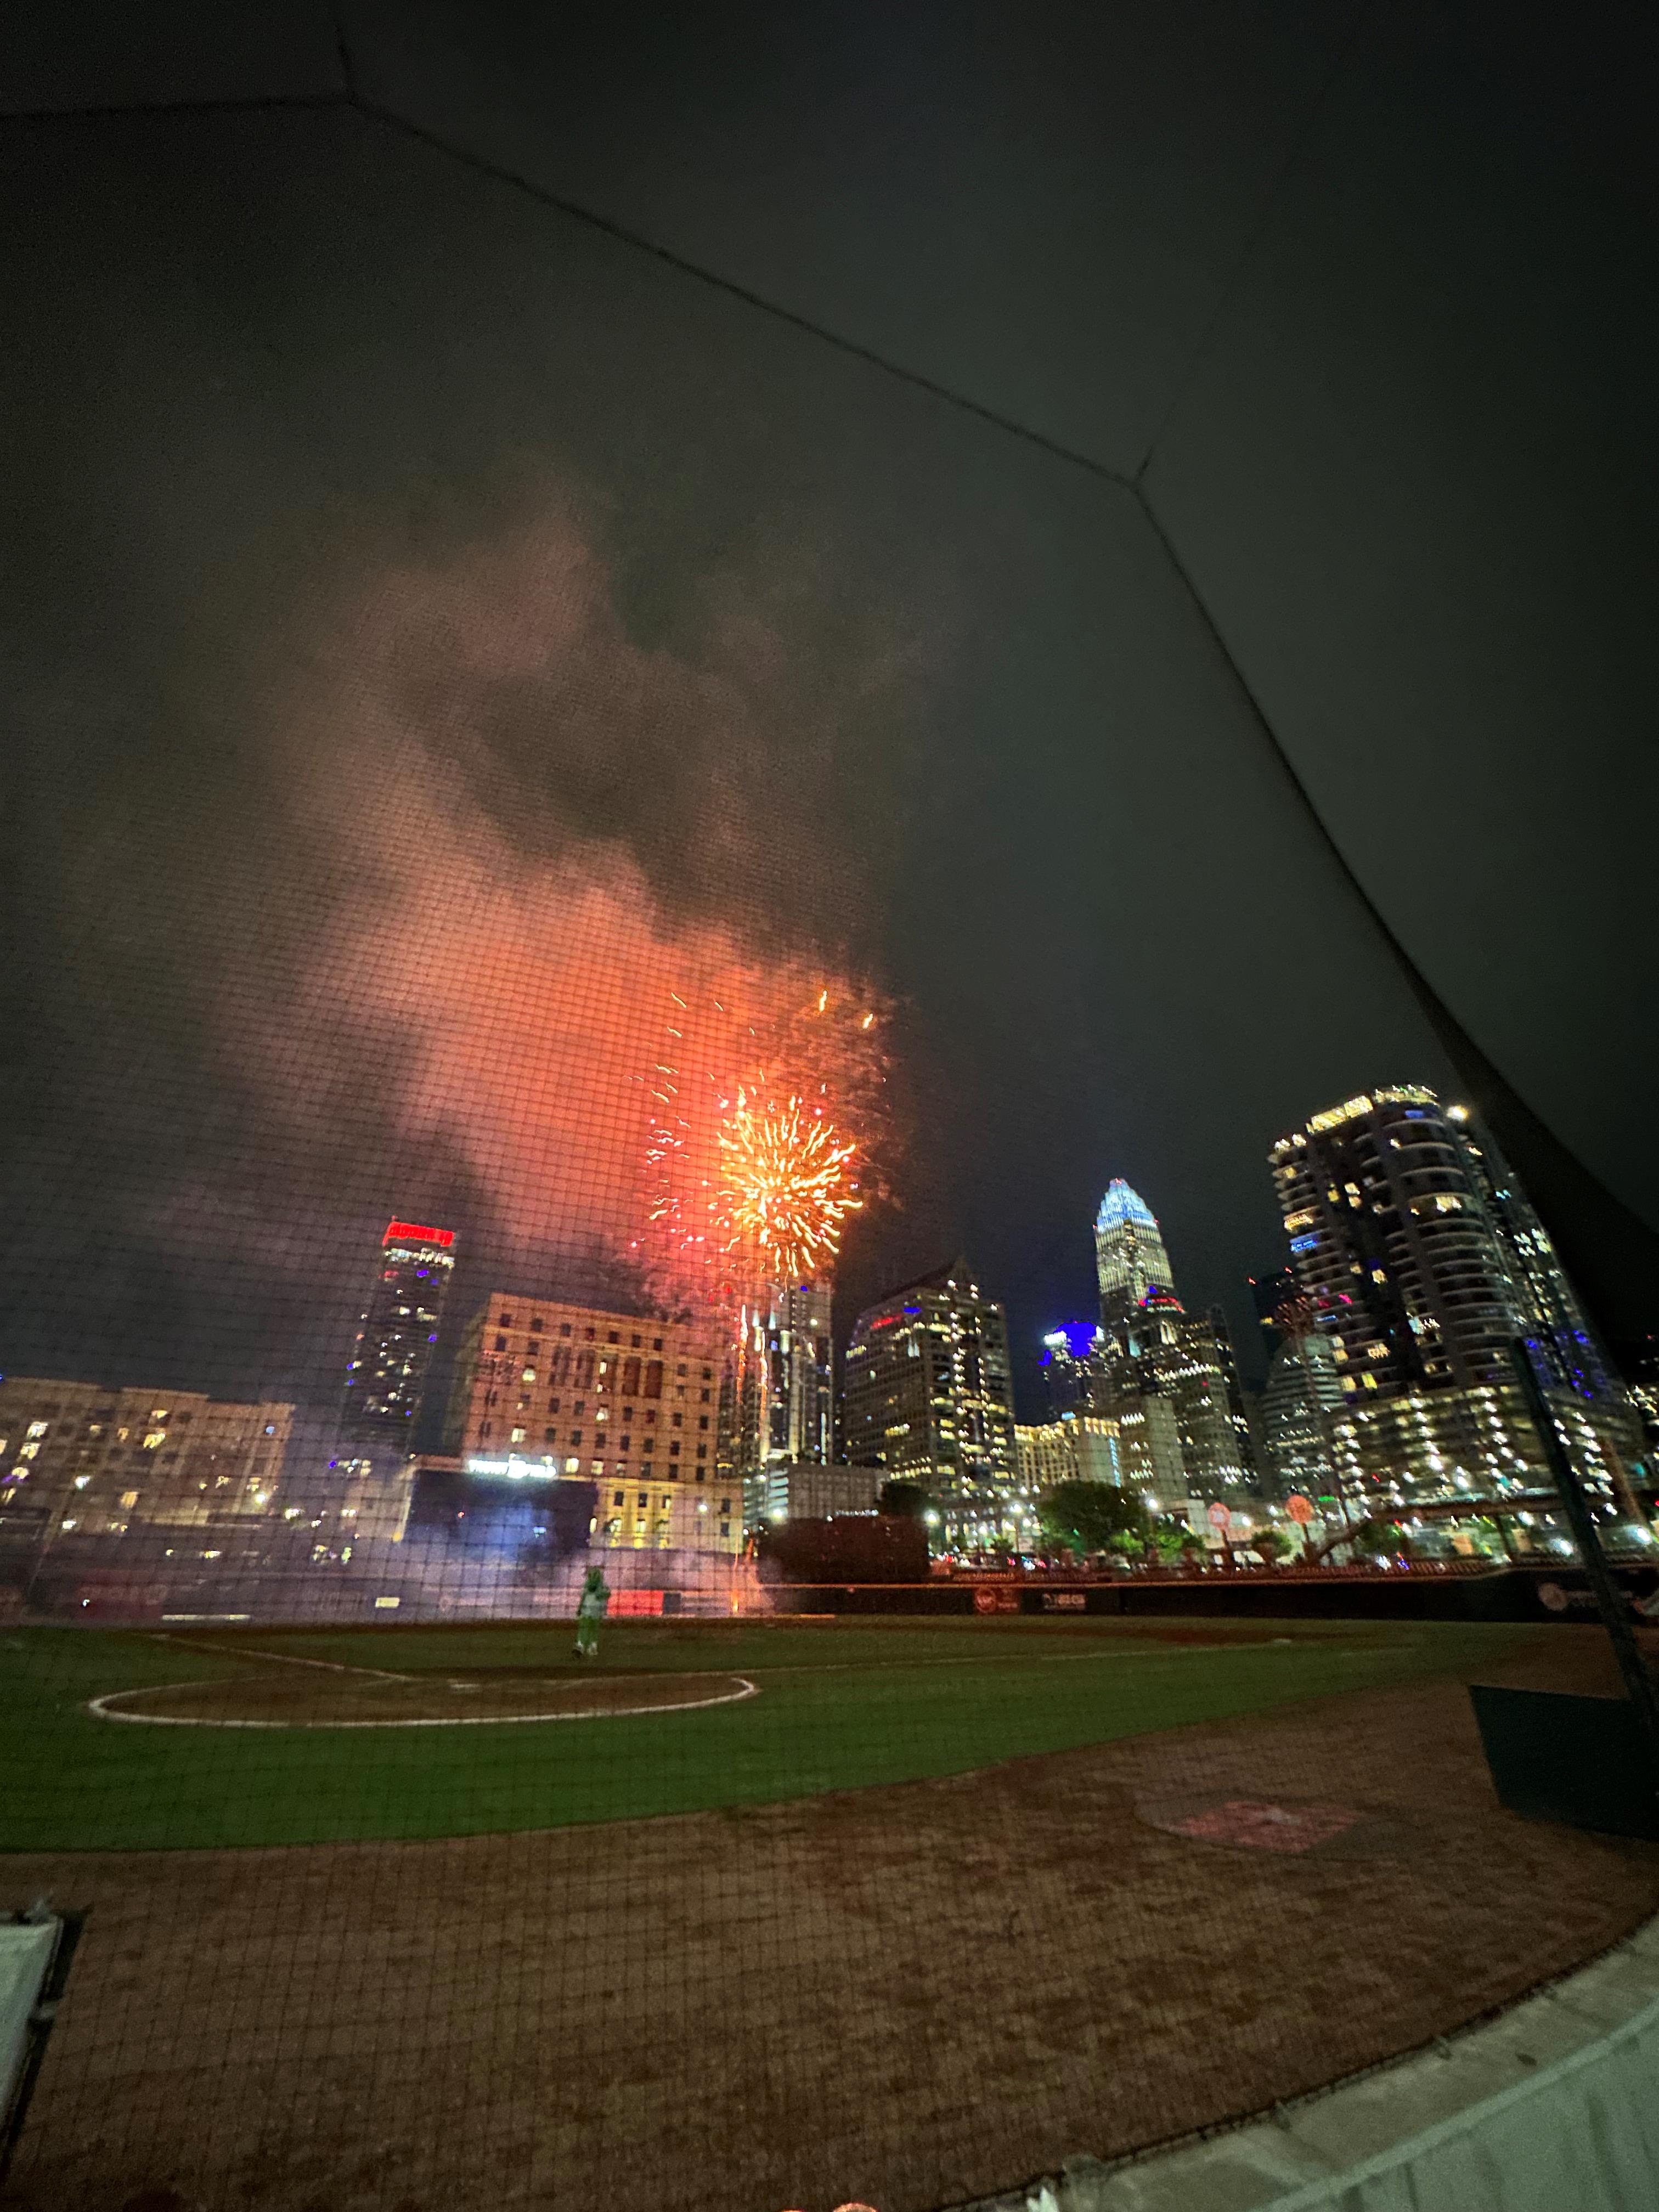 Fireworks Above a Baseball Field